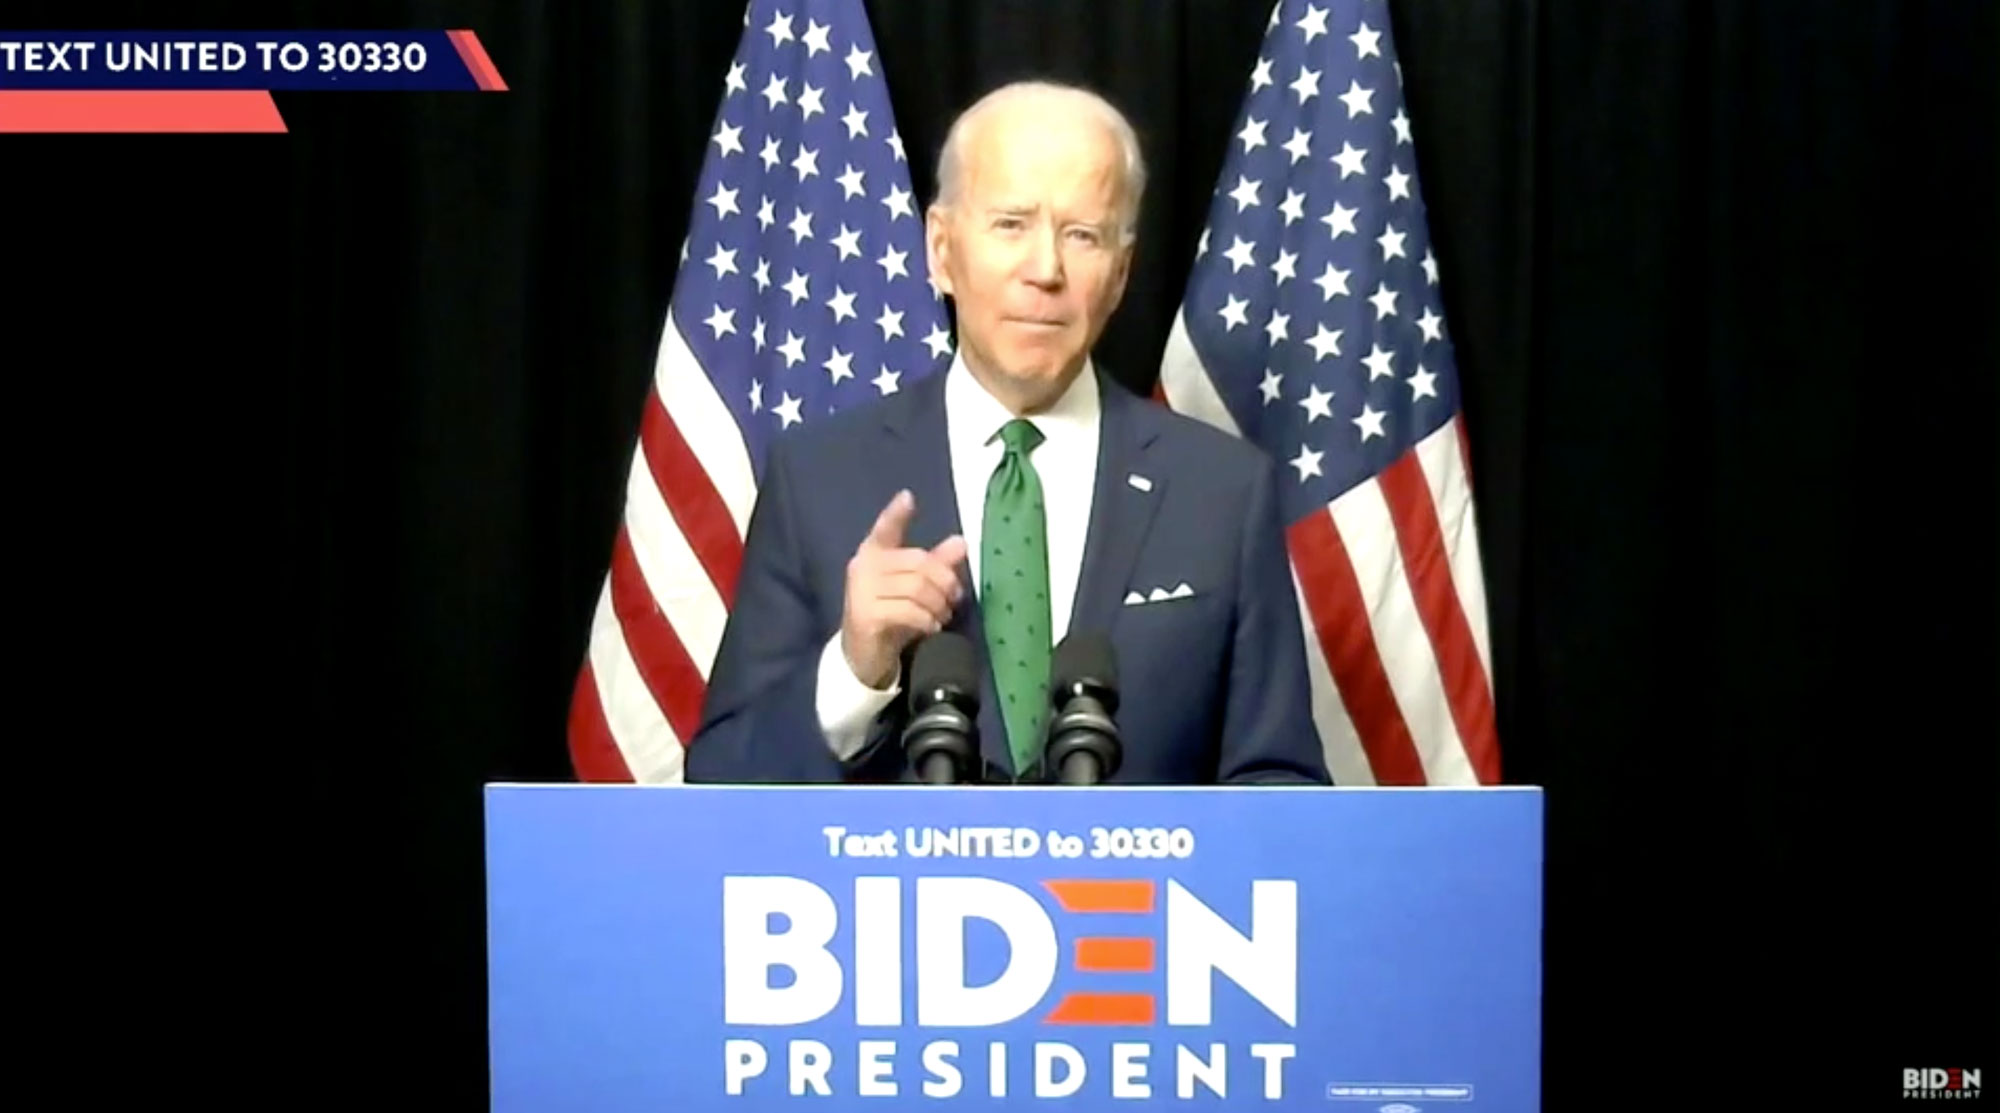 Biden for President Campaign